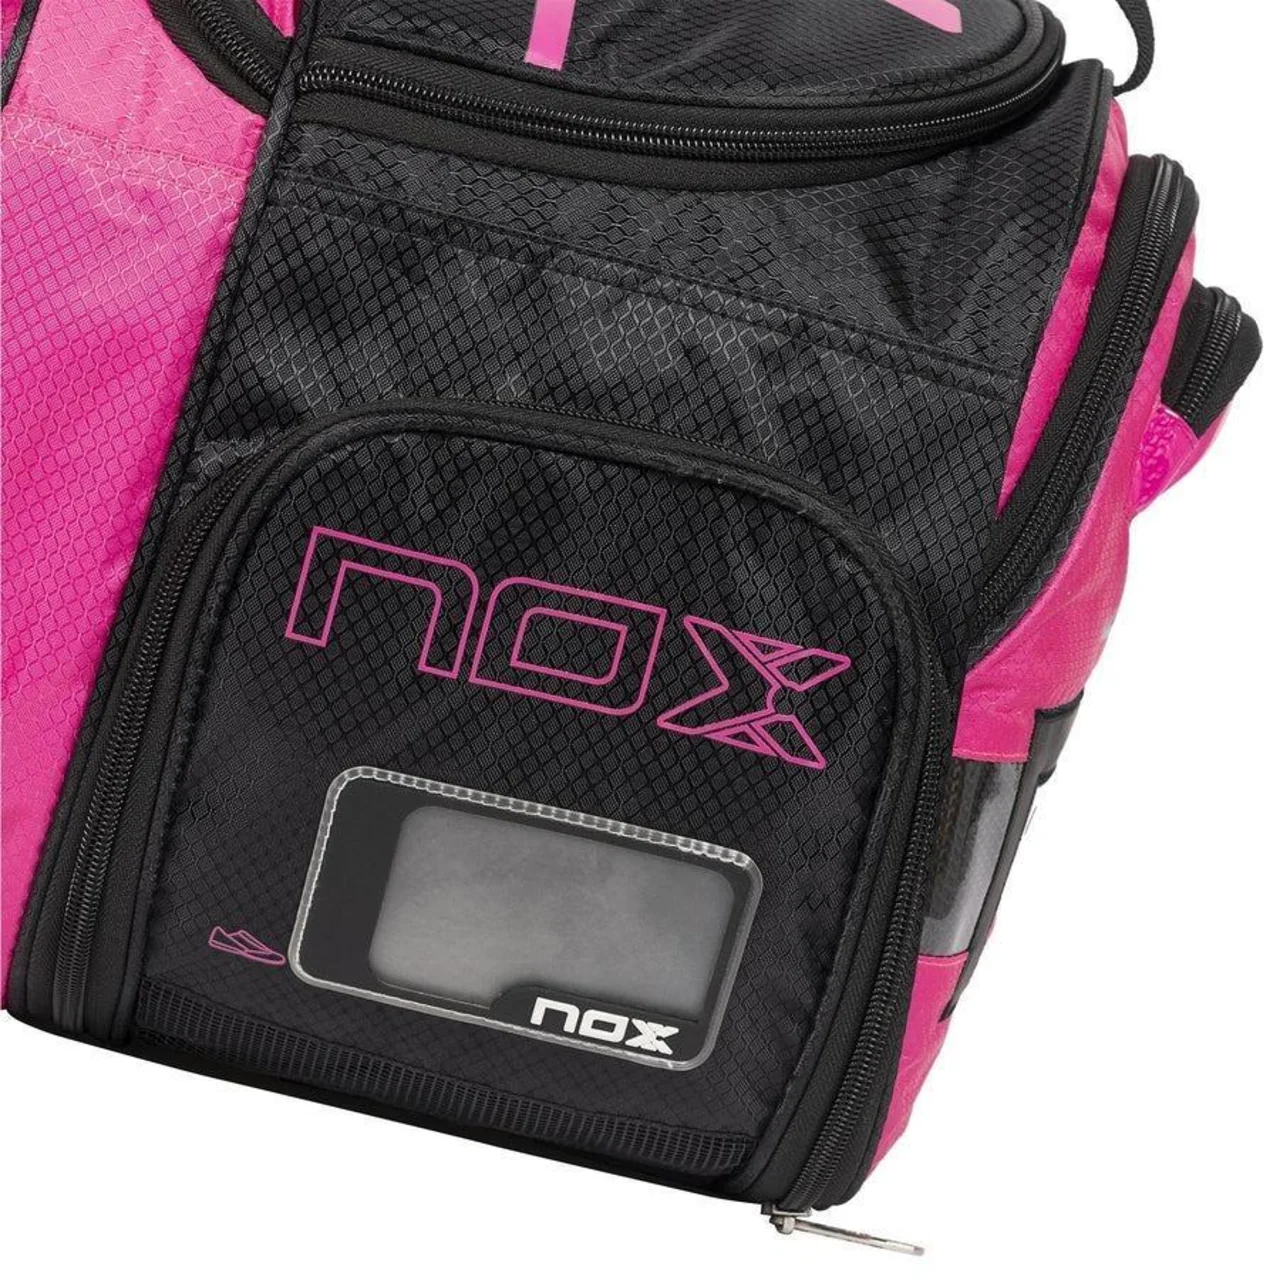 Nox Thermo Pro Padel Bag Black/Pink